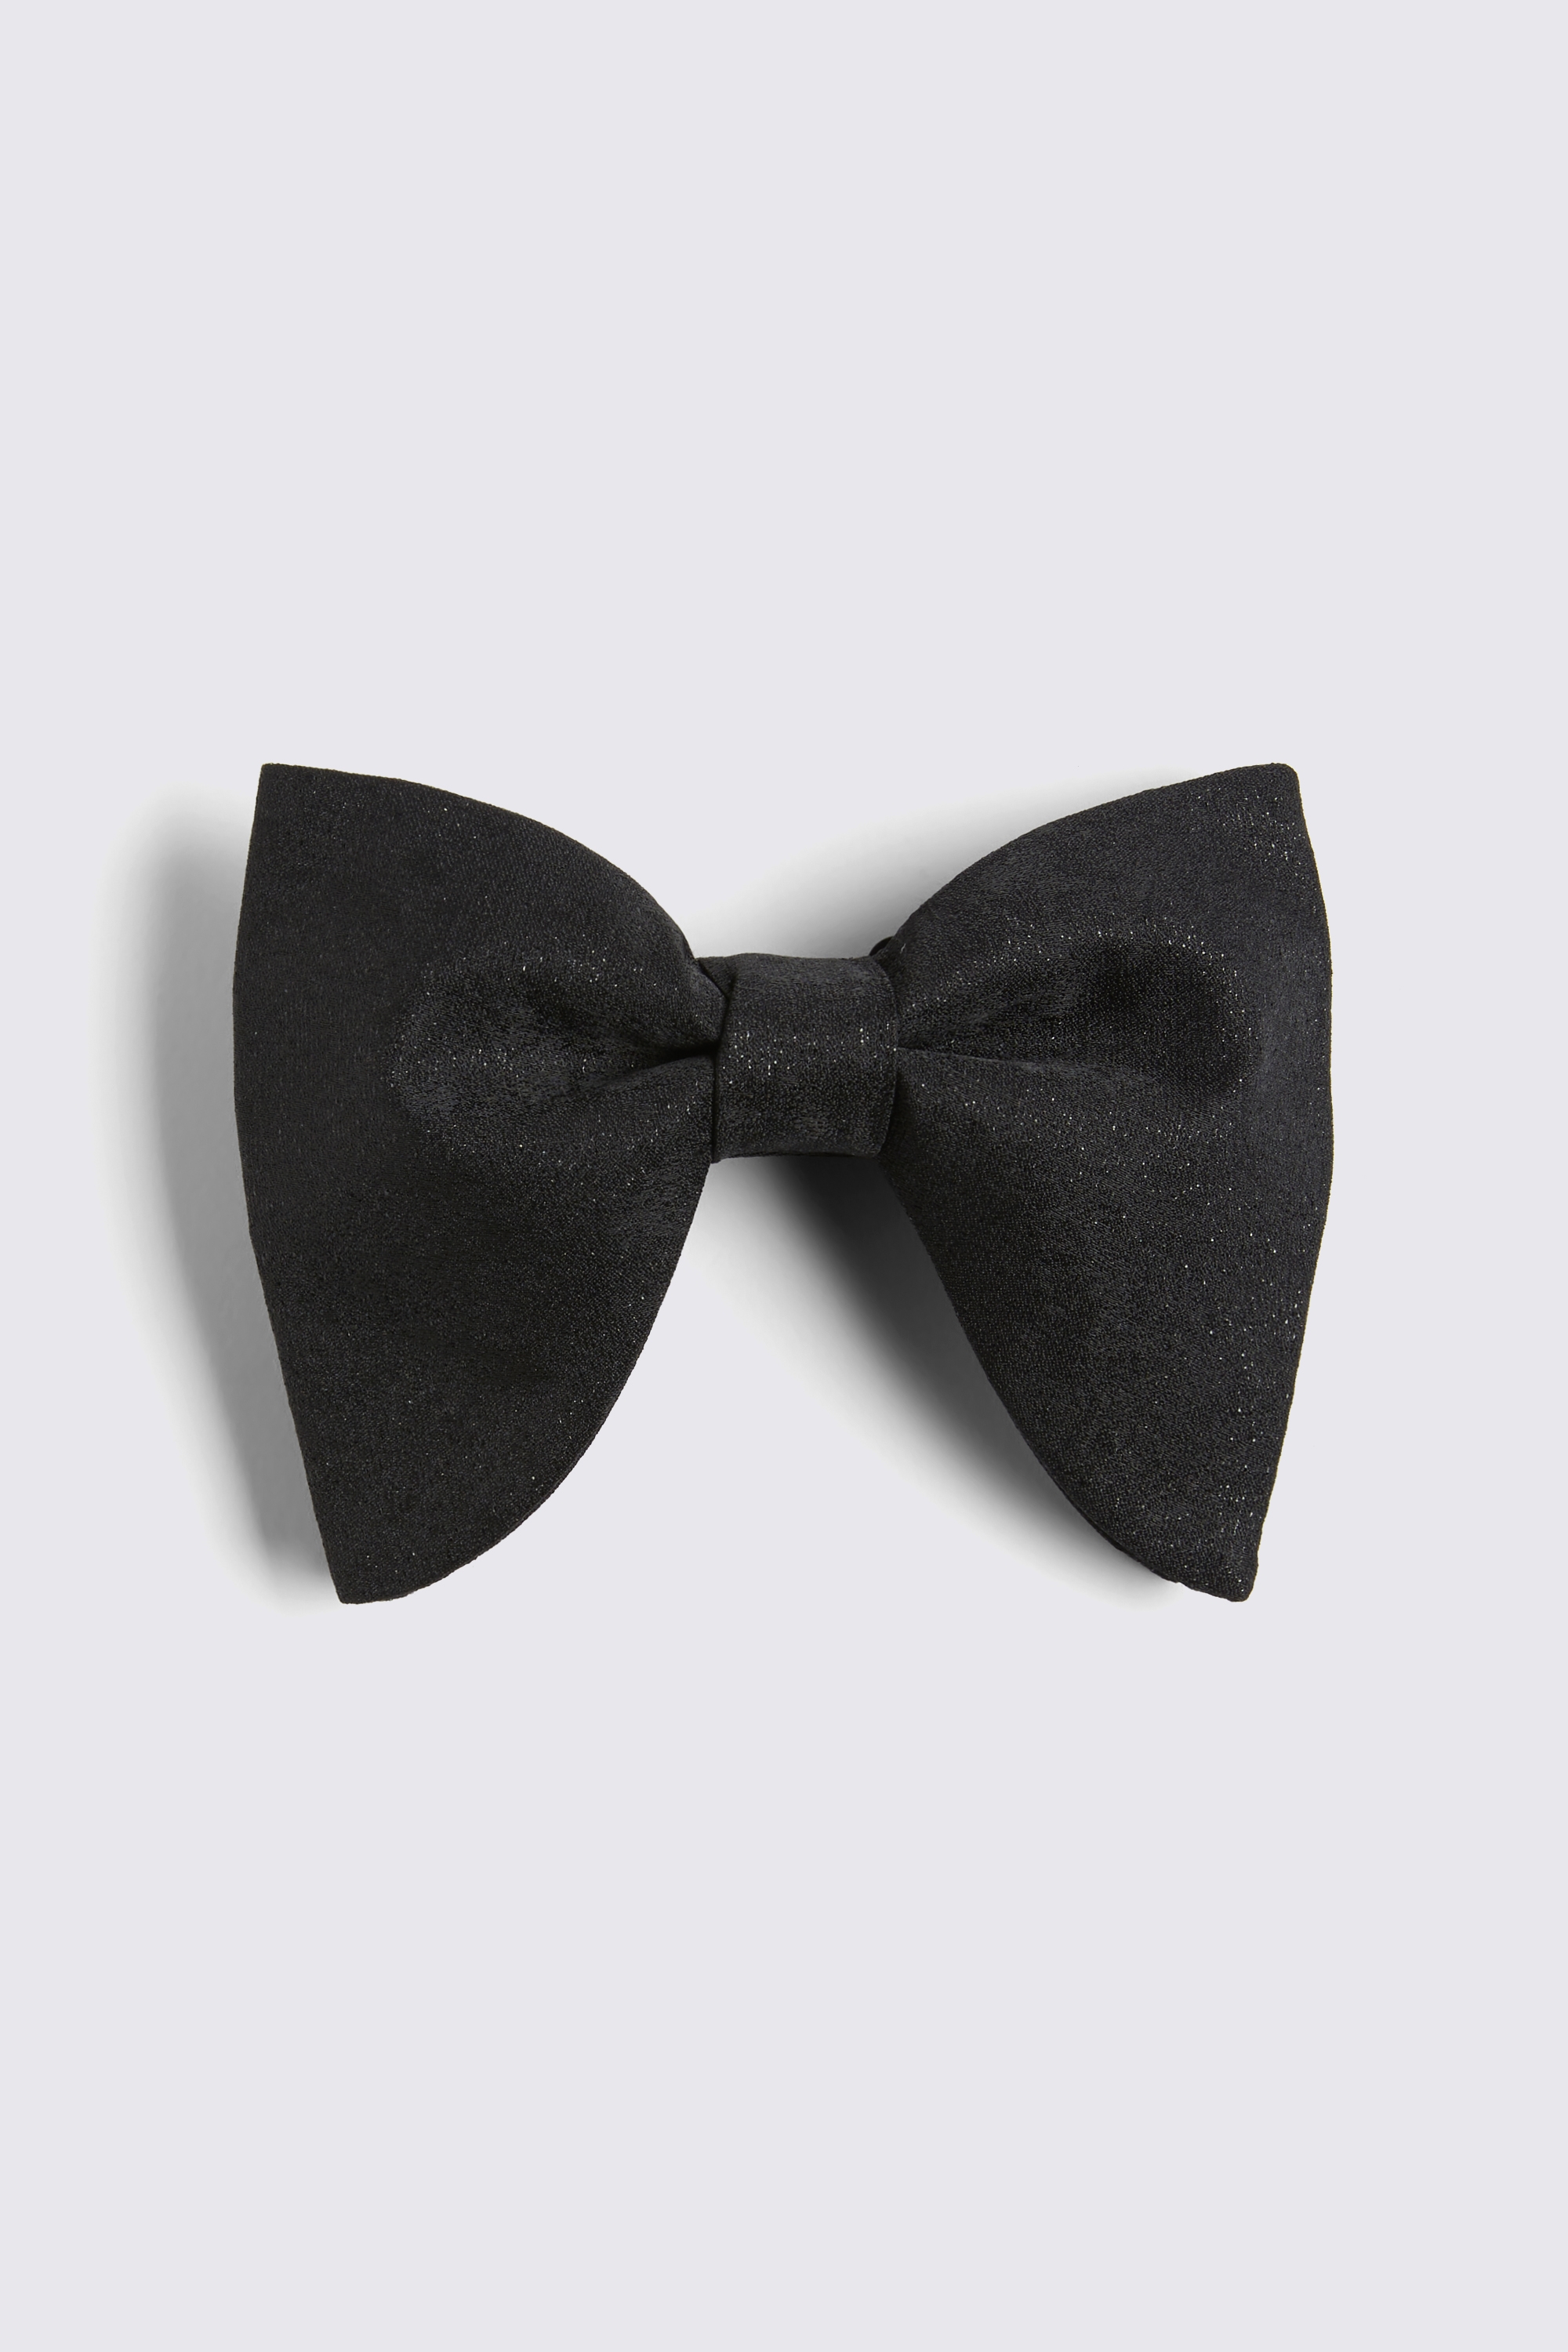 Black Lurex Oversized Bow Tie | Buy Online at Moss